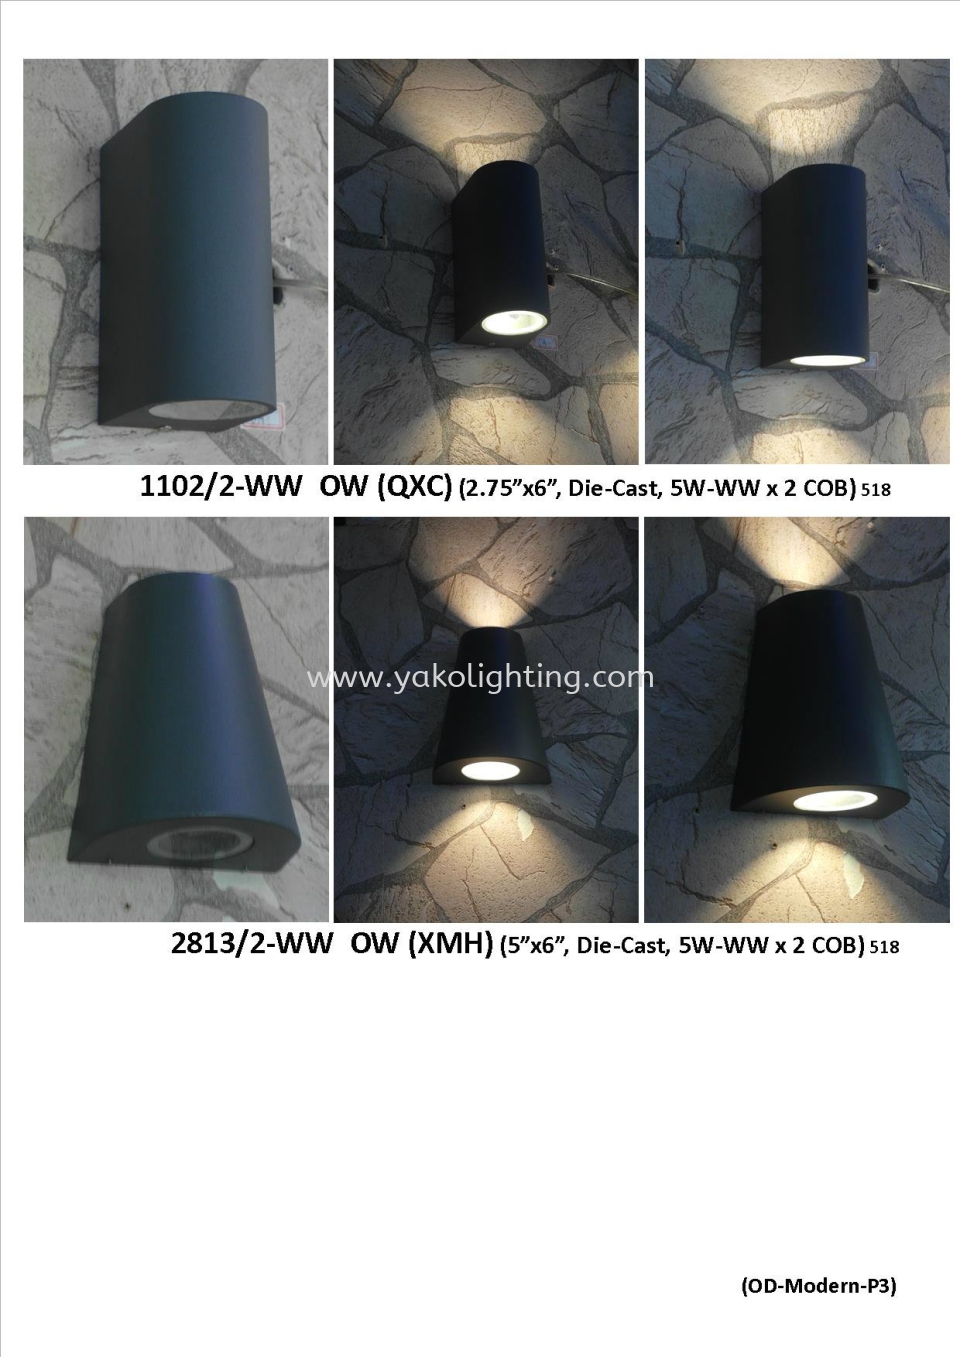 3034_1_OD-Modern-P3 OUTDOOR WALL LAMP 